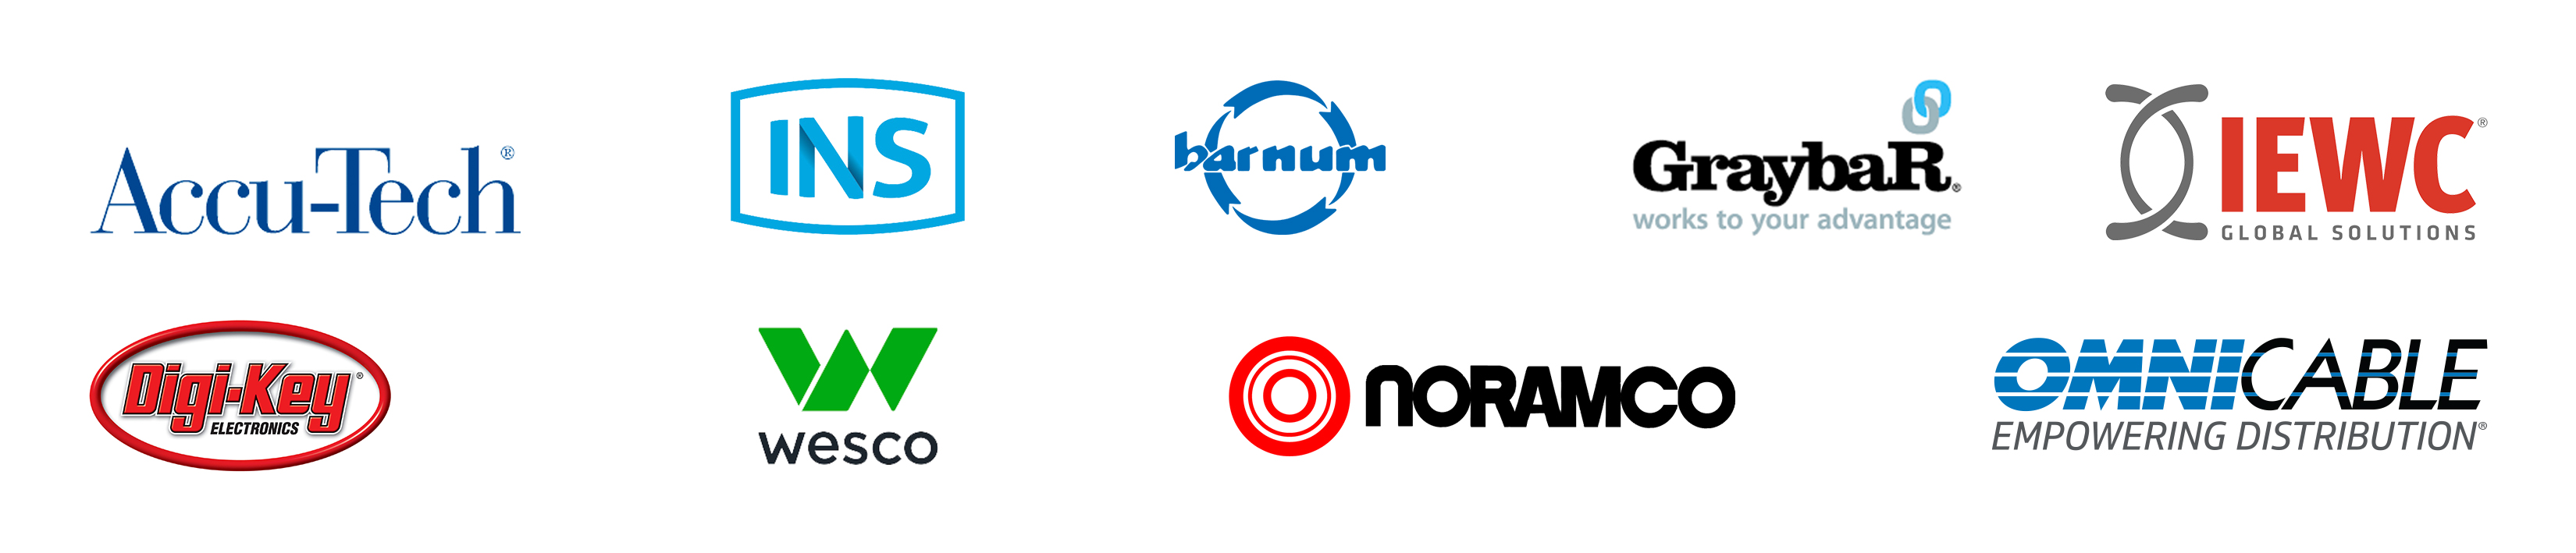 Logos for Accu-Tech, INS, Barnum, Graybar, IEWC, Digi-Key, Wesco, Noramco & OmniCable